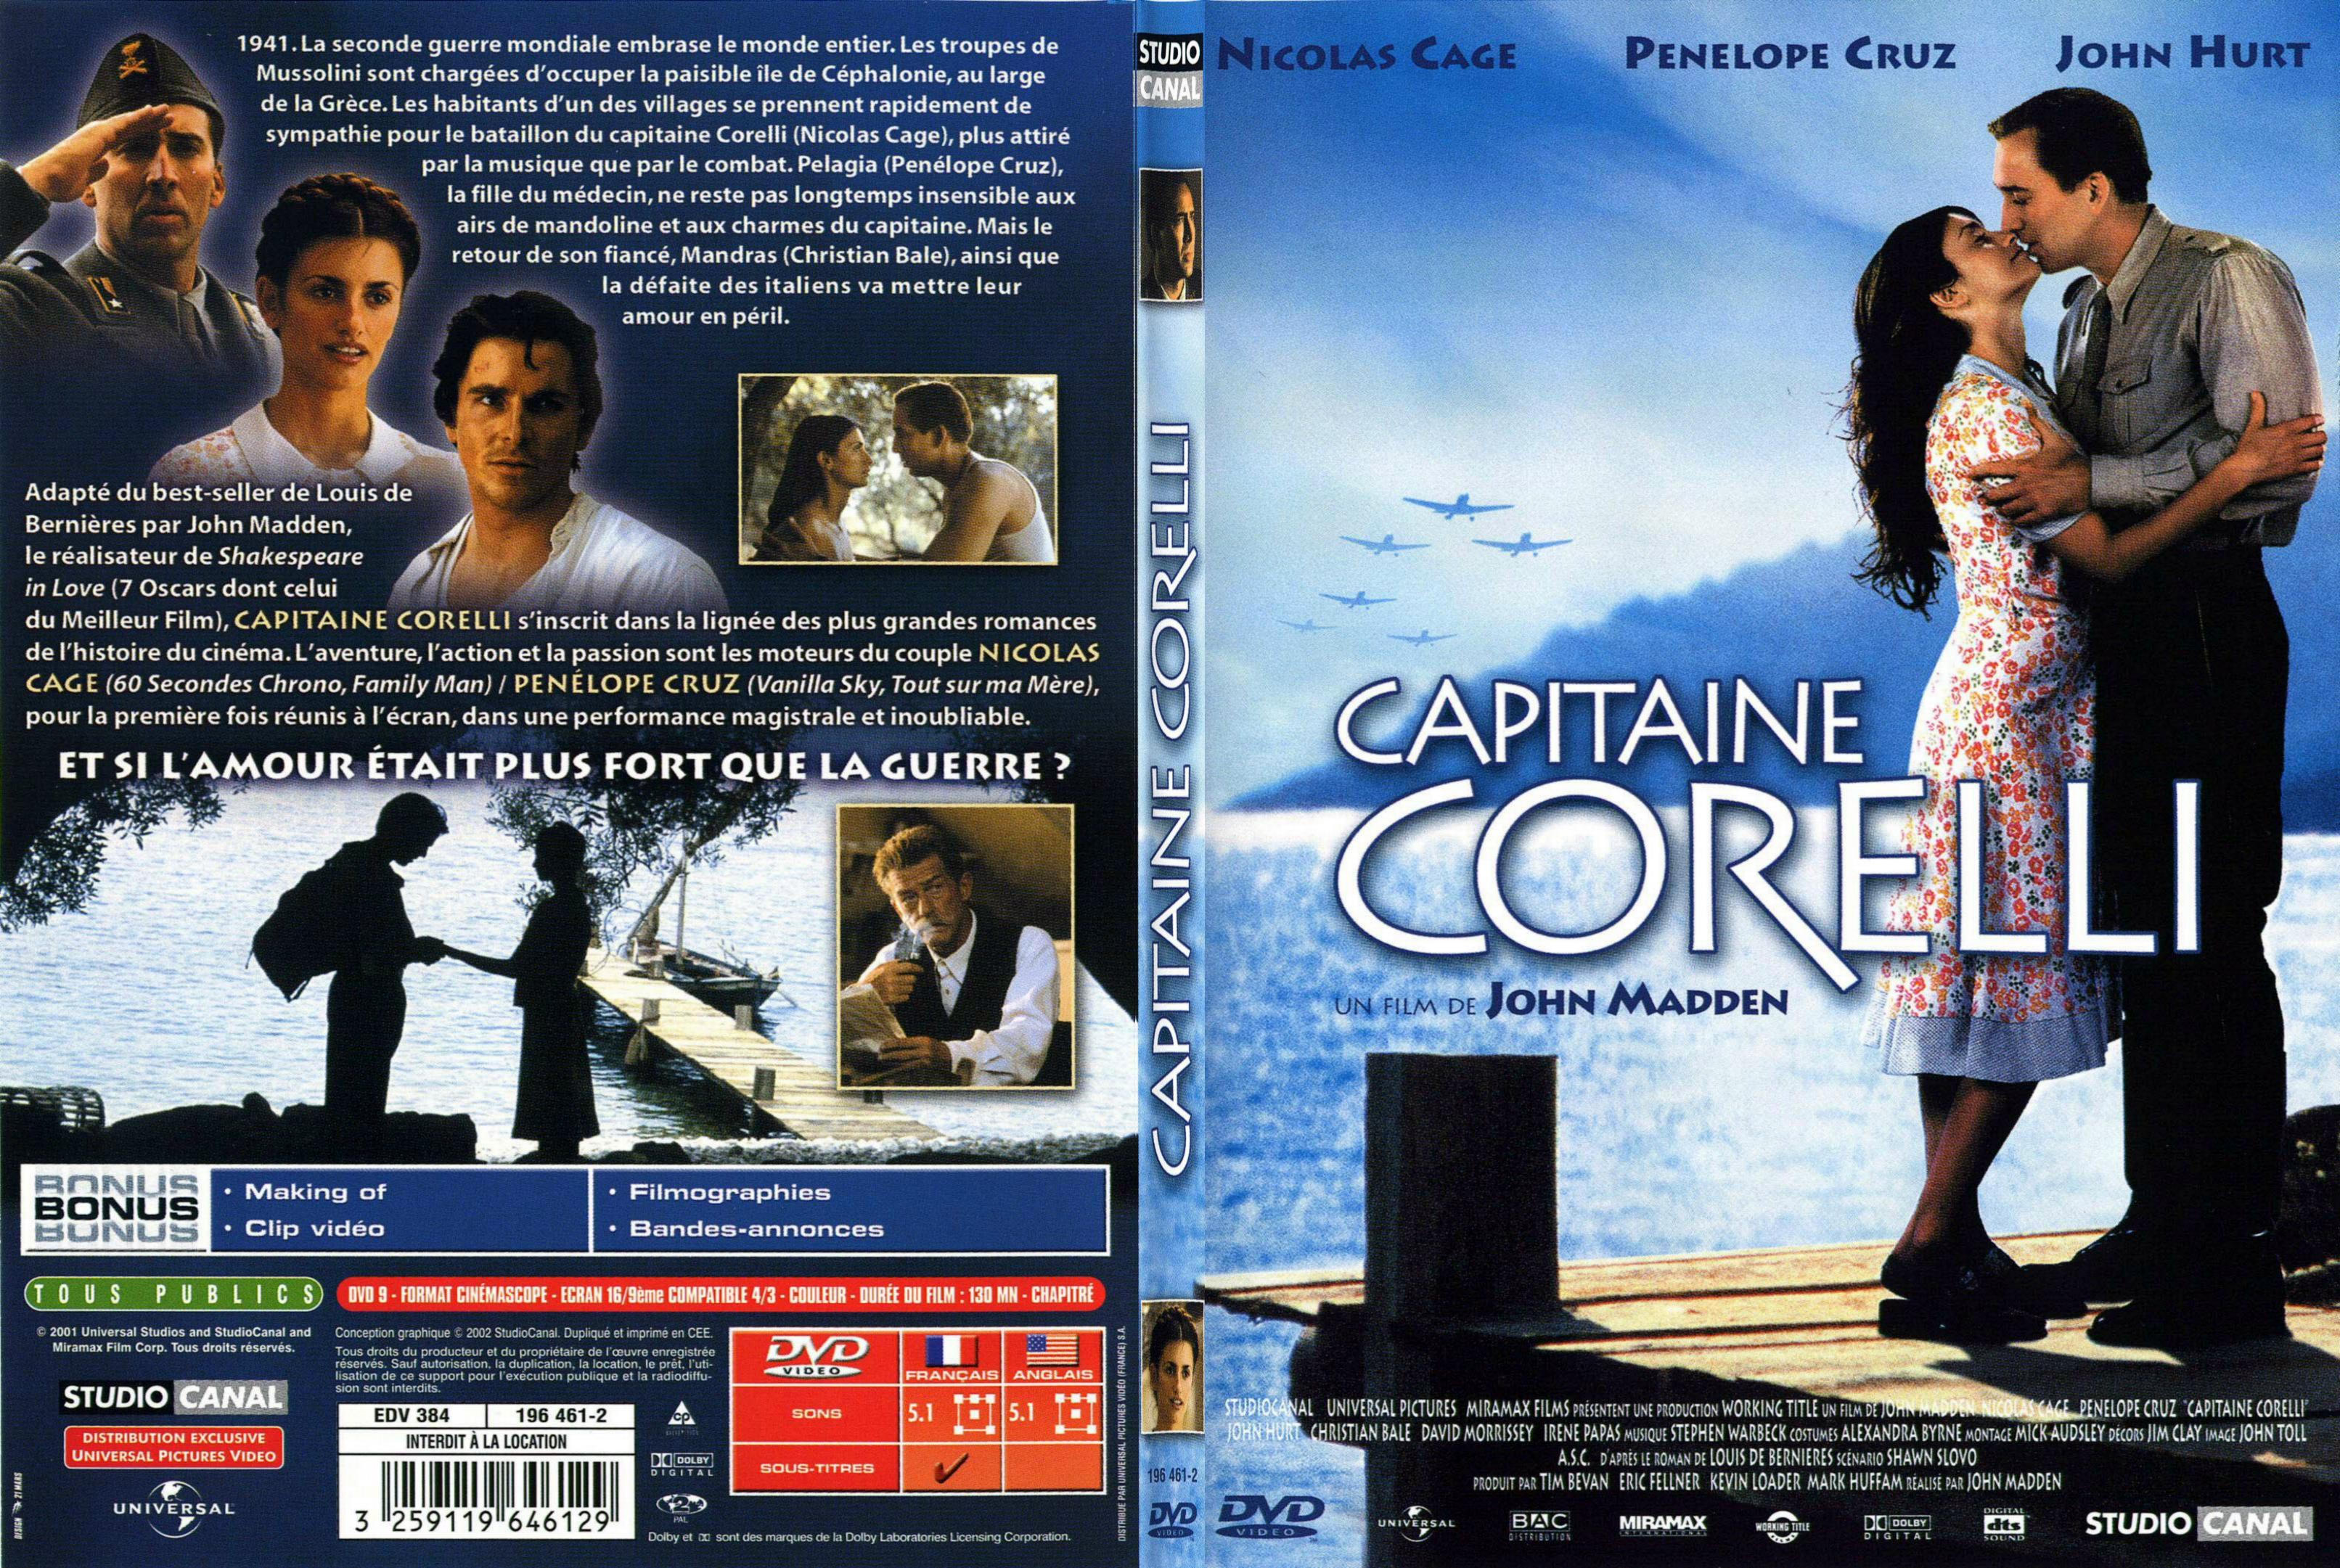 Jaquette DVD Capitaine Corelli - SLIM